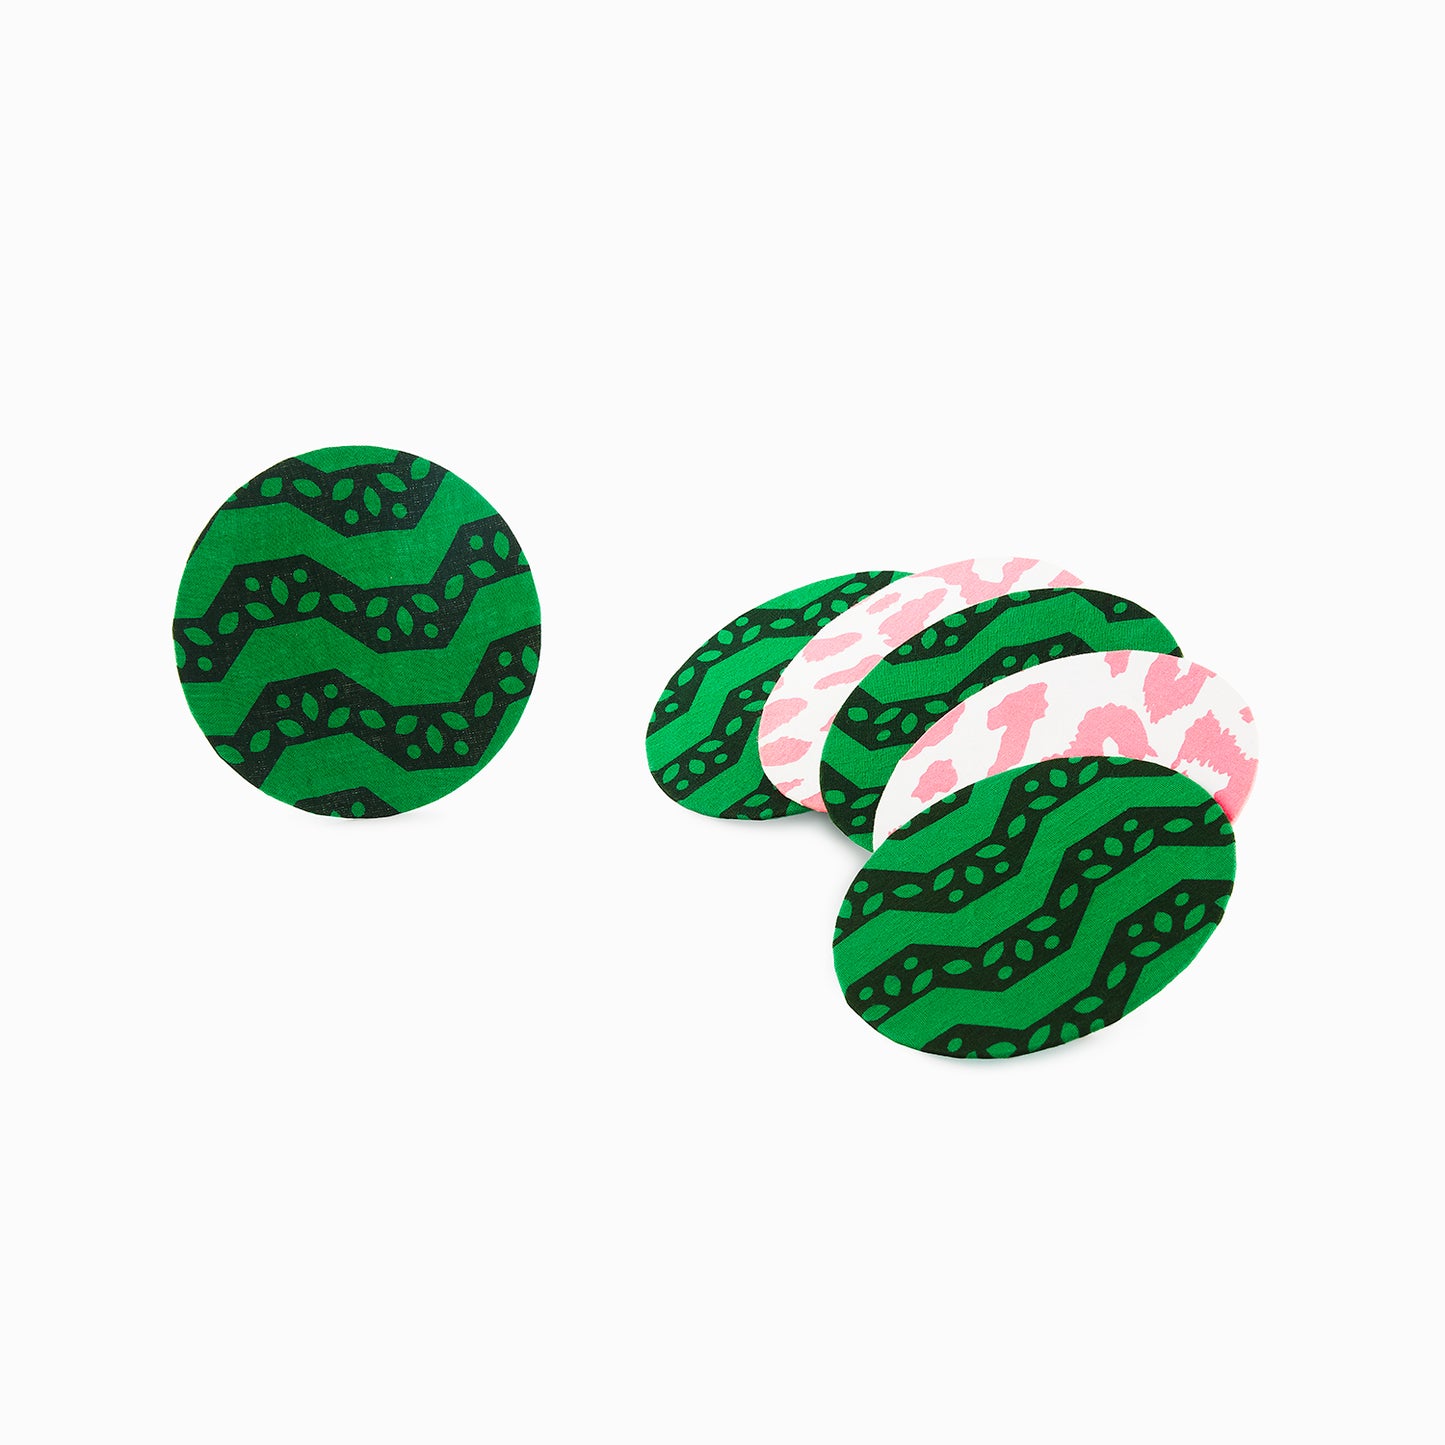 Emerald Green & White - CD Coaster Set of 6